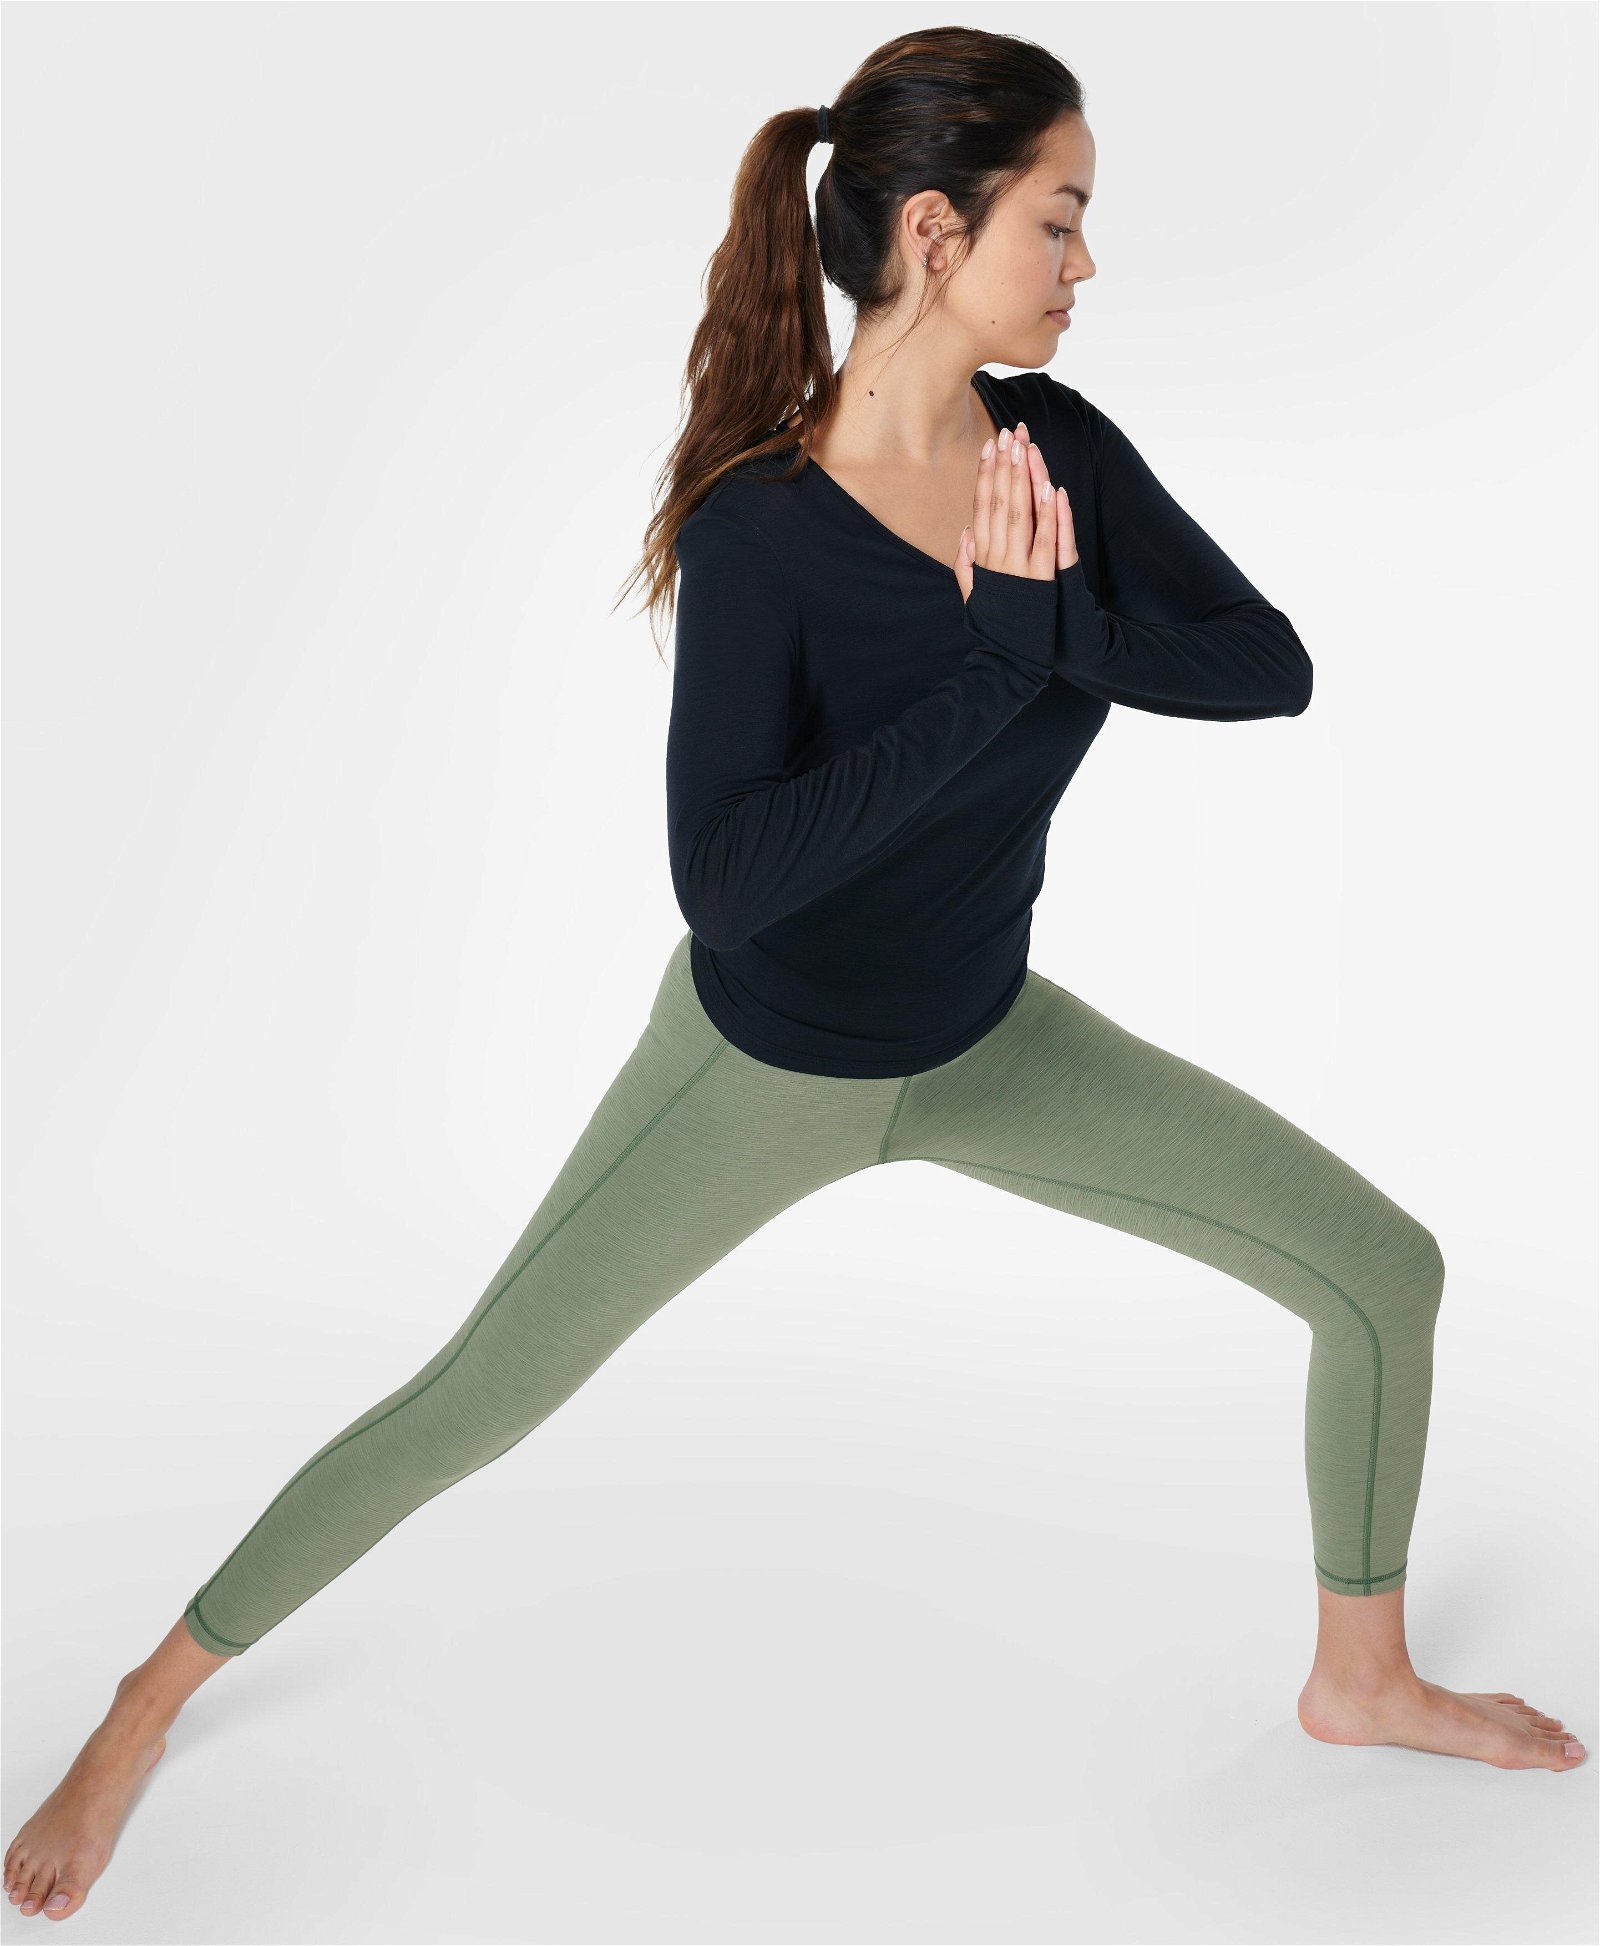  WPYYI Women's Long Sleeve Yoga Tops Back Pilates